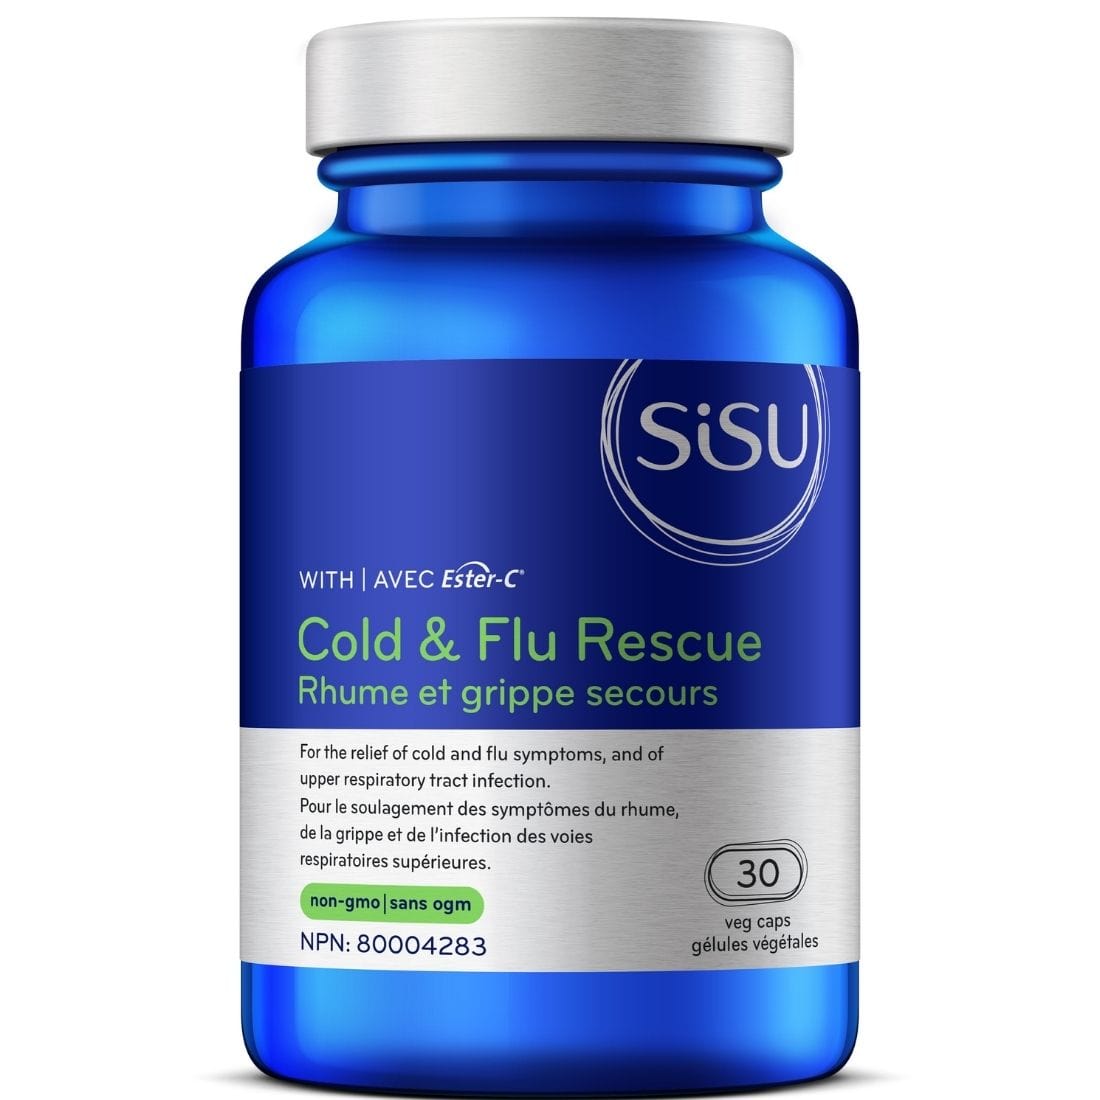 SISU Cold and Flu Rescue with Ester-C